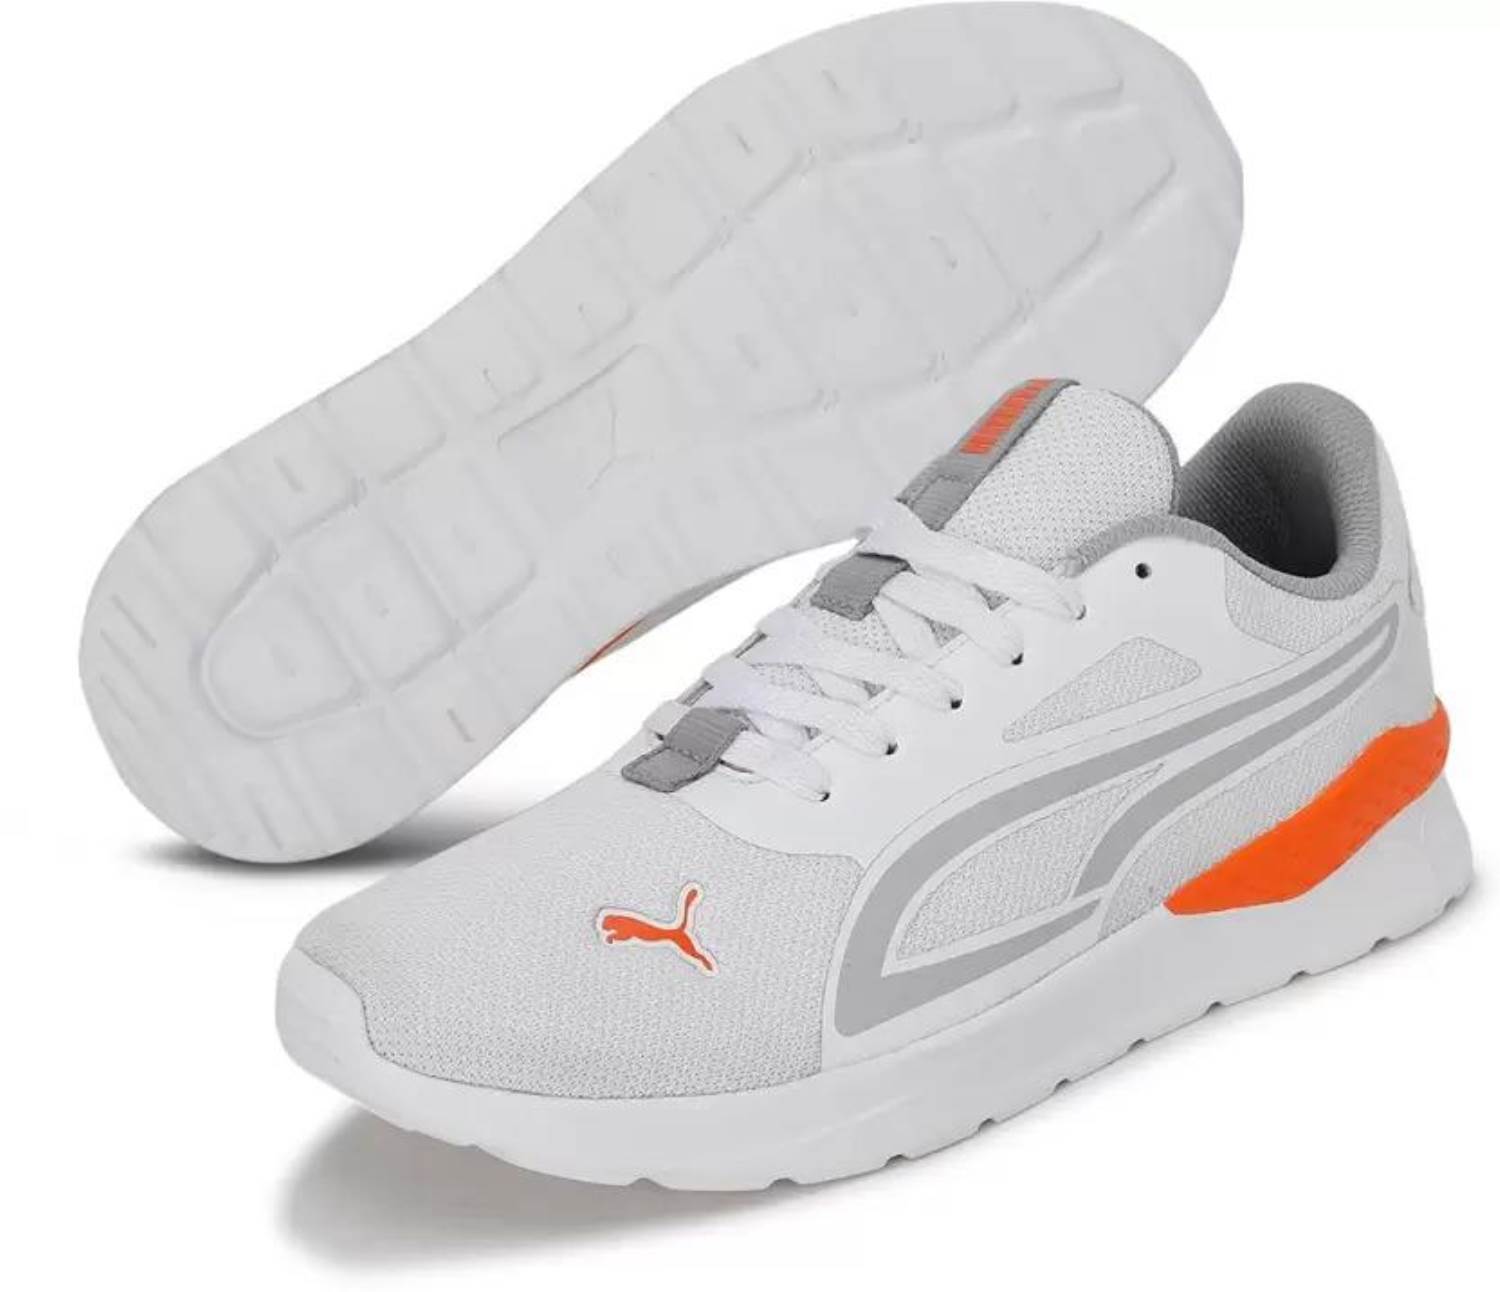 Levering Tegenstrijdigheid Namens Puma Brand Mens Armour V2 Casuals Running Sports Shoes 388701 01  (White/Orange) :: RAJASHOES